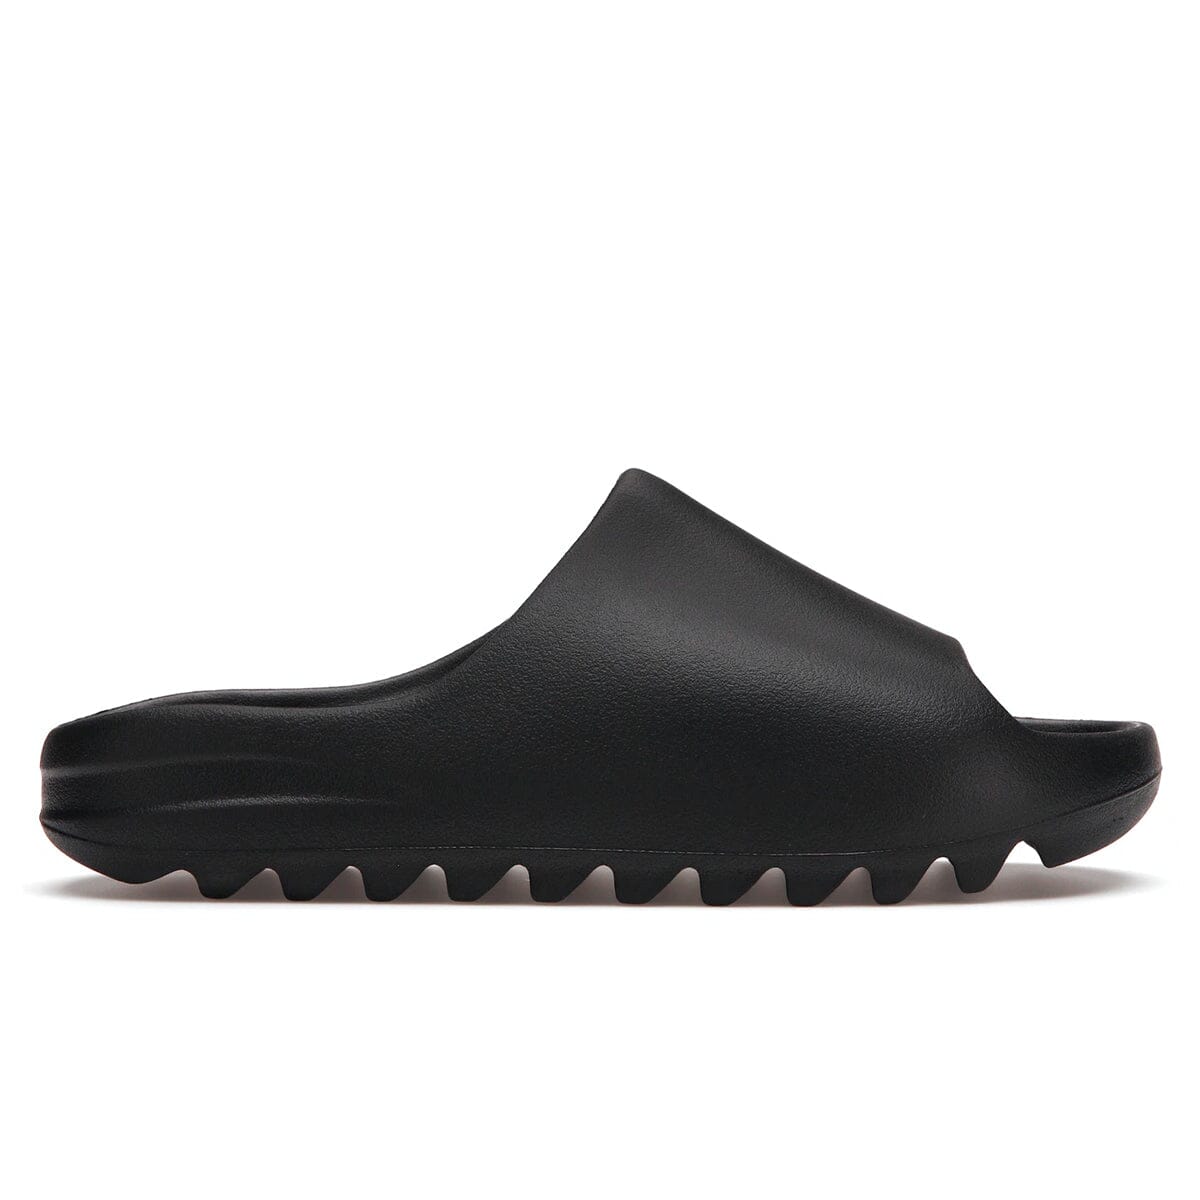 Adidas Yeezy Slide Onyx Black Yeezy Slide Blizz Sneakers 